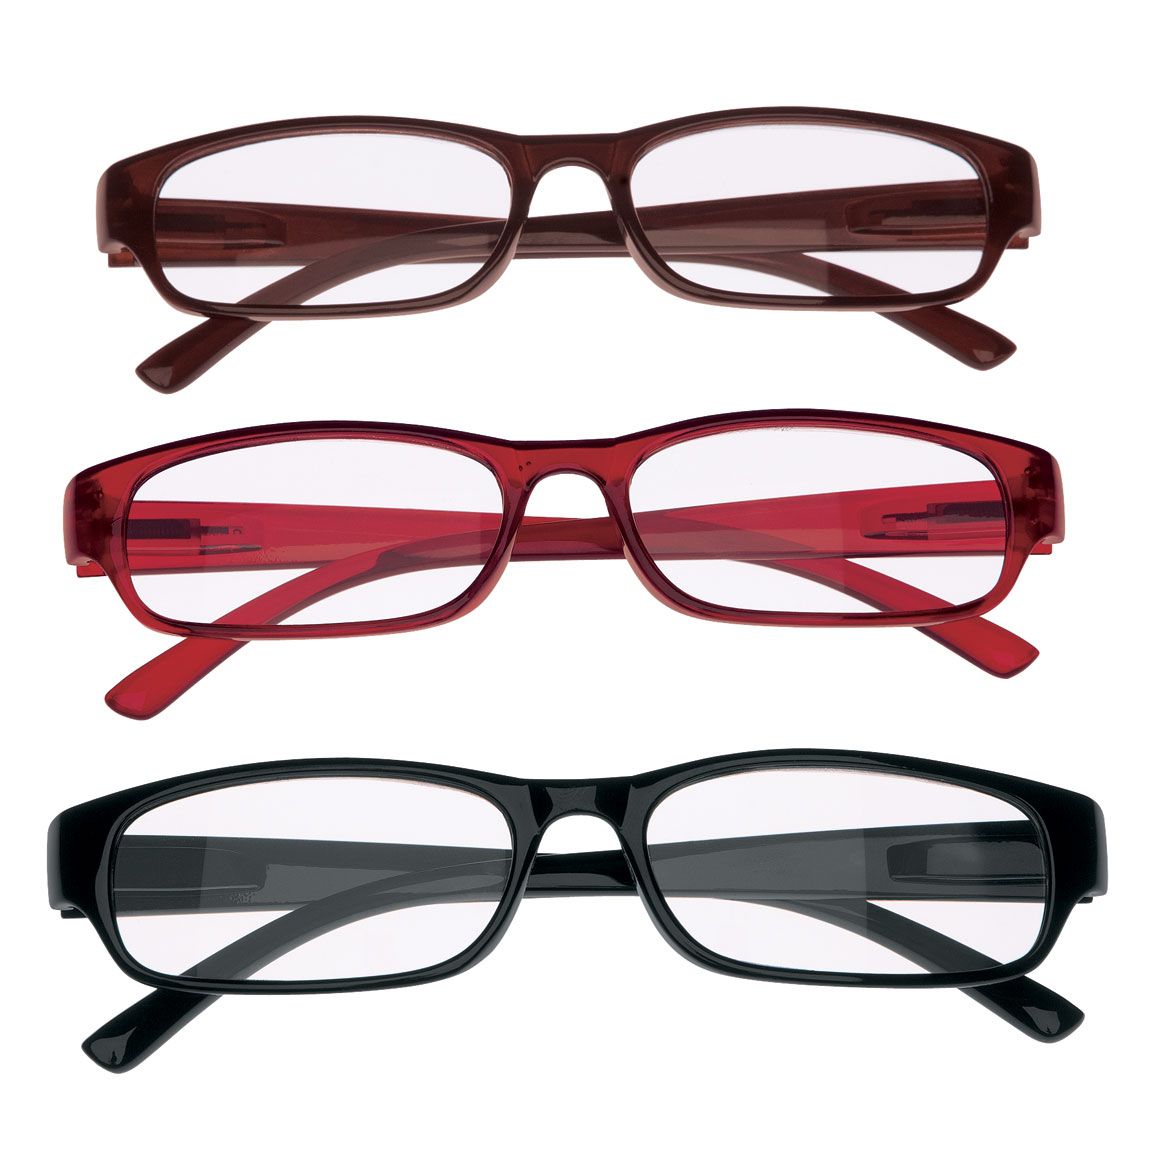 Bifocal Reading Glasses, Set of 3 + '-' + 358872